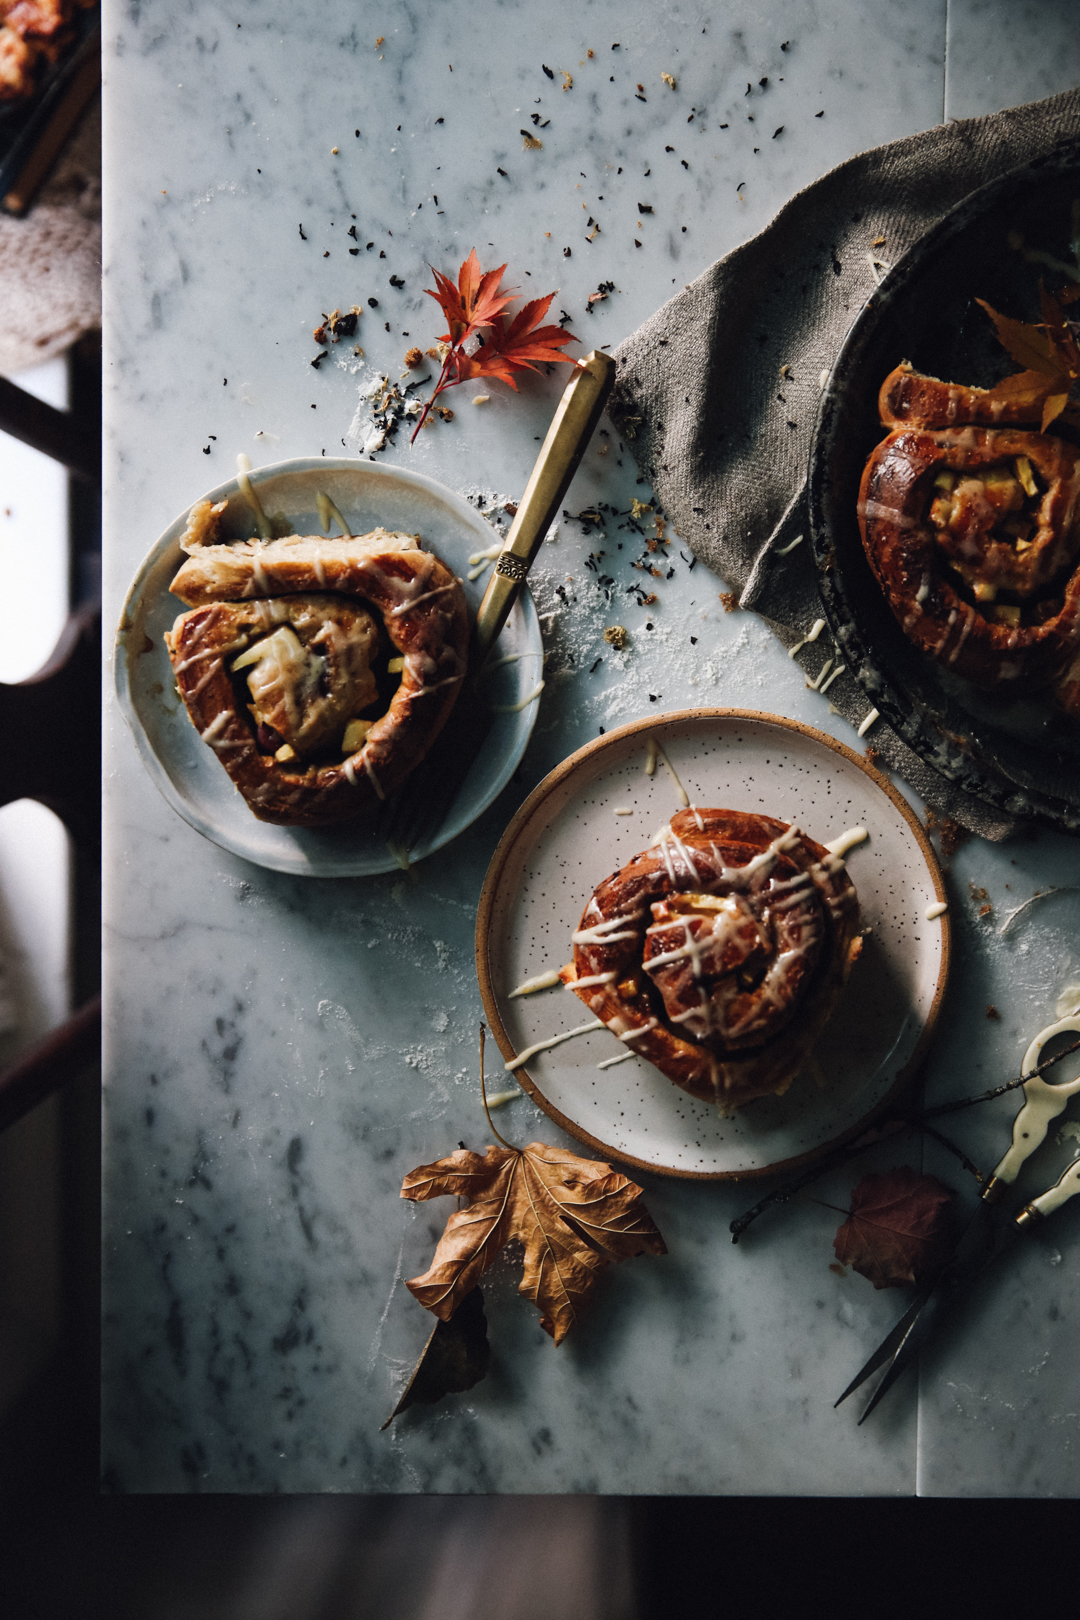 spiced-autumn-cinnamon-rolls-photography-styling-recipe-by-christiann-koepke-of-christiannkoepke-com-2